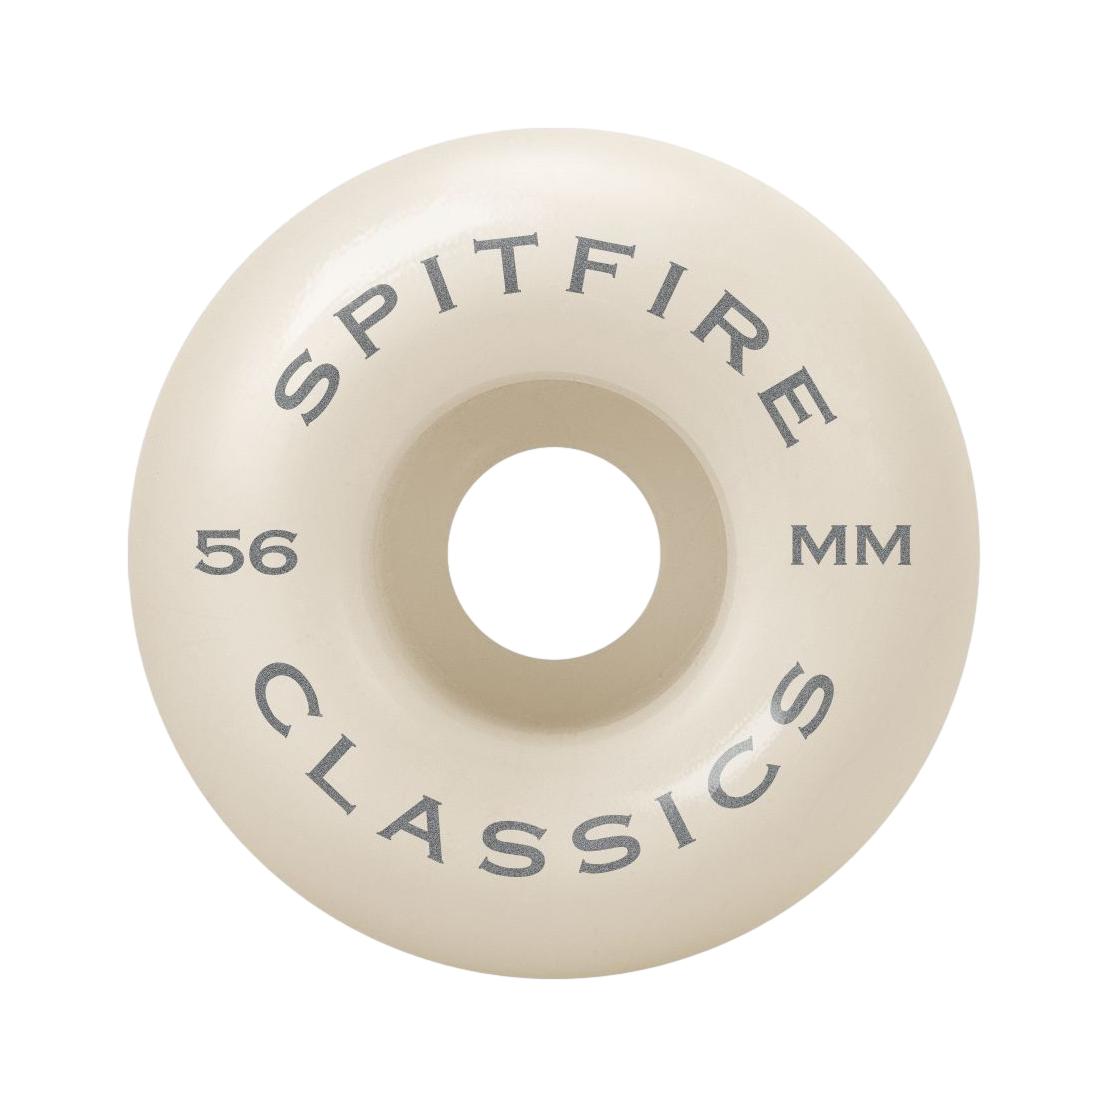 Spitfire Classic 56 mm Wheels - Venue Skateboards